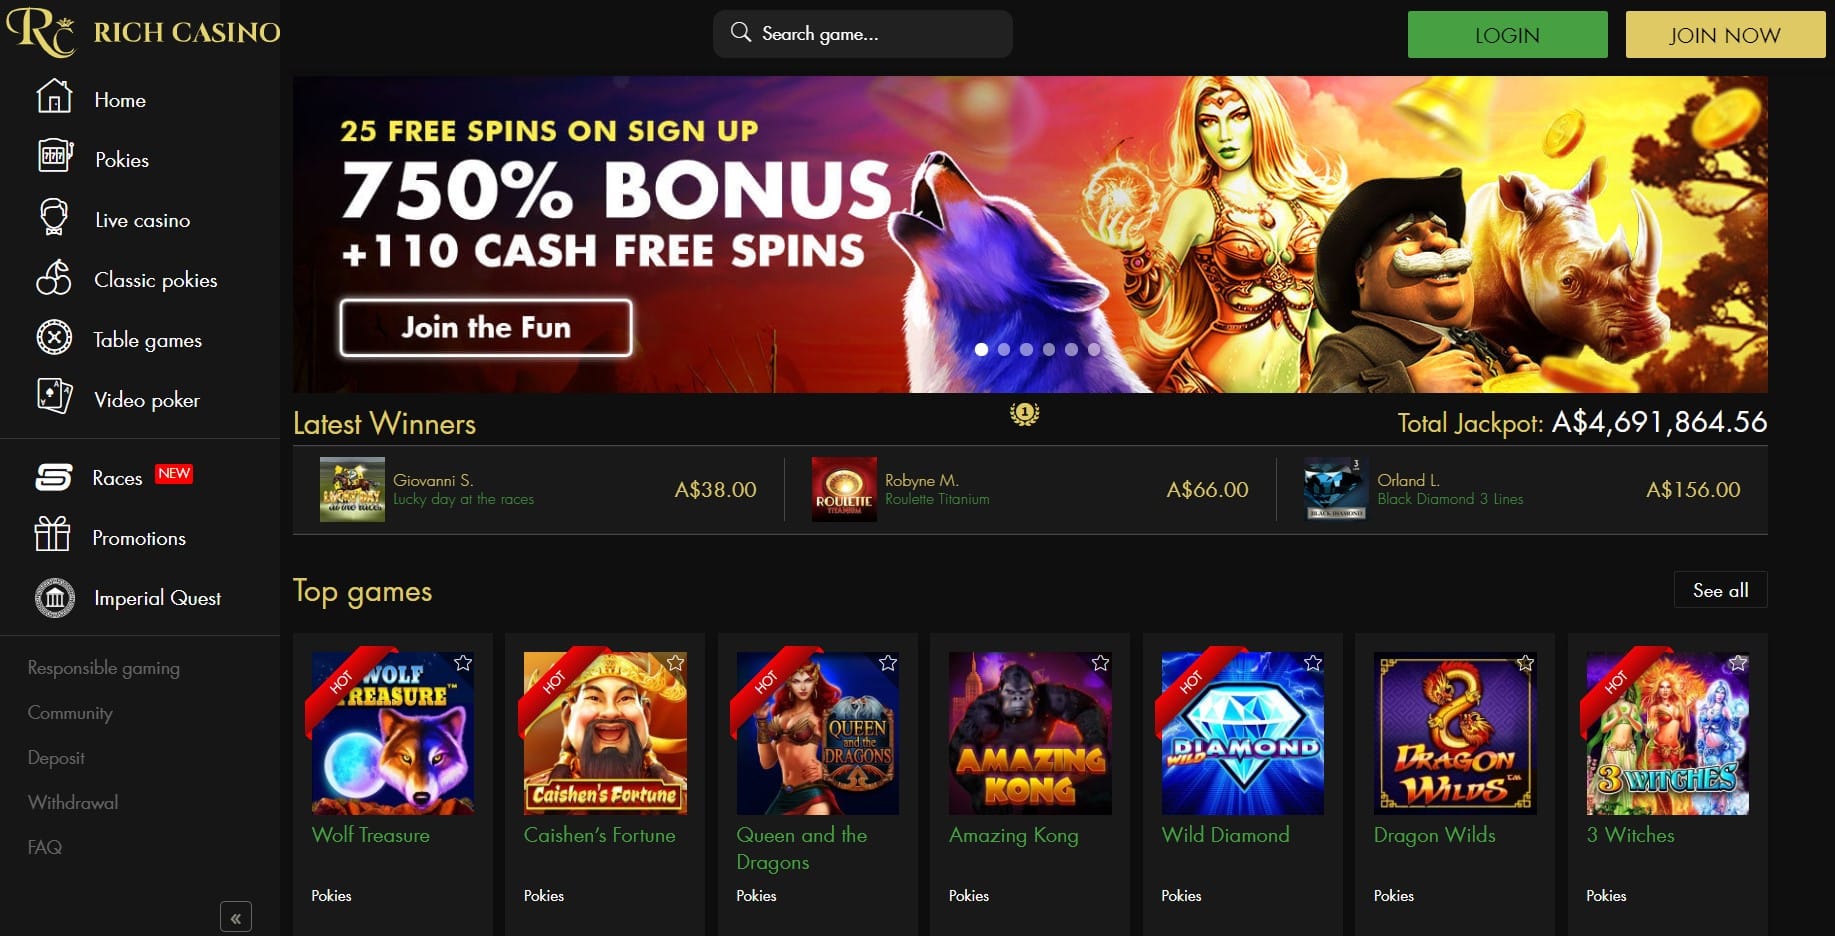 Rich casino home page